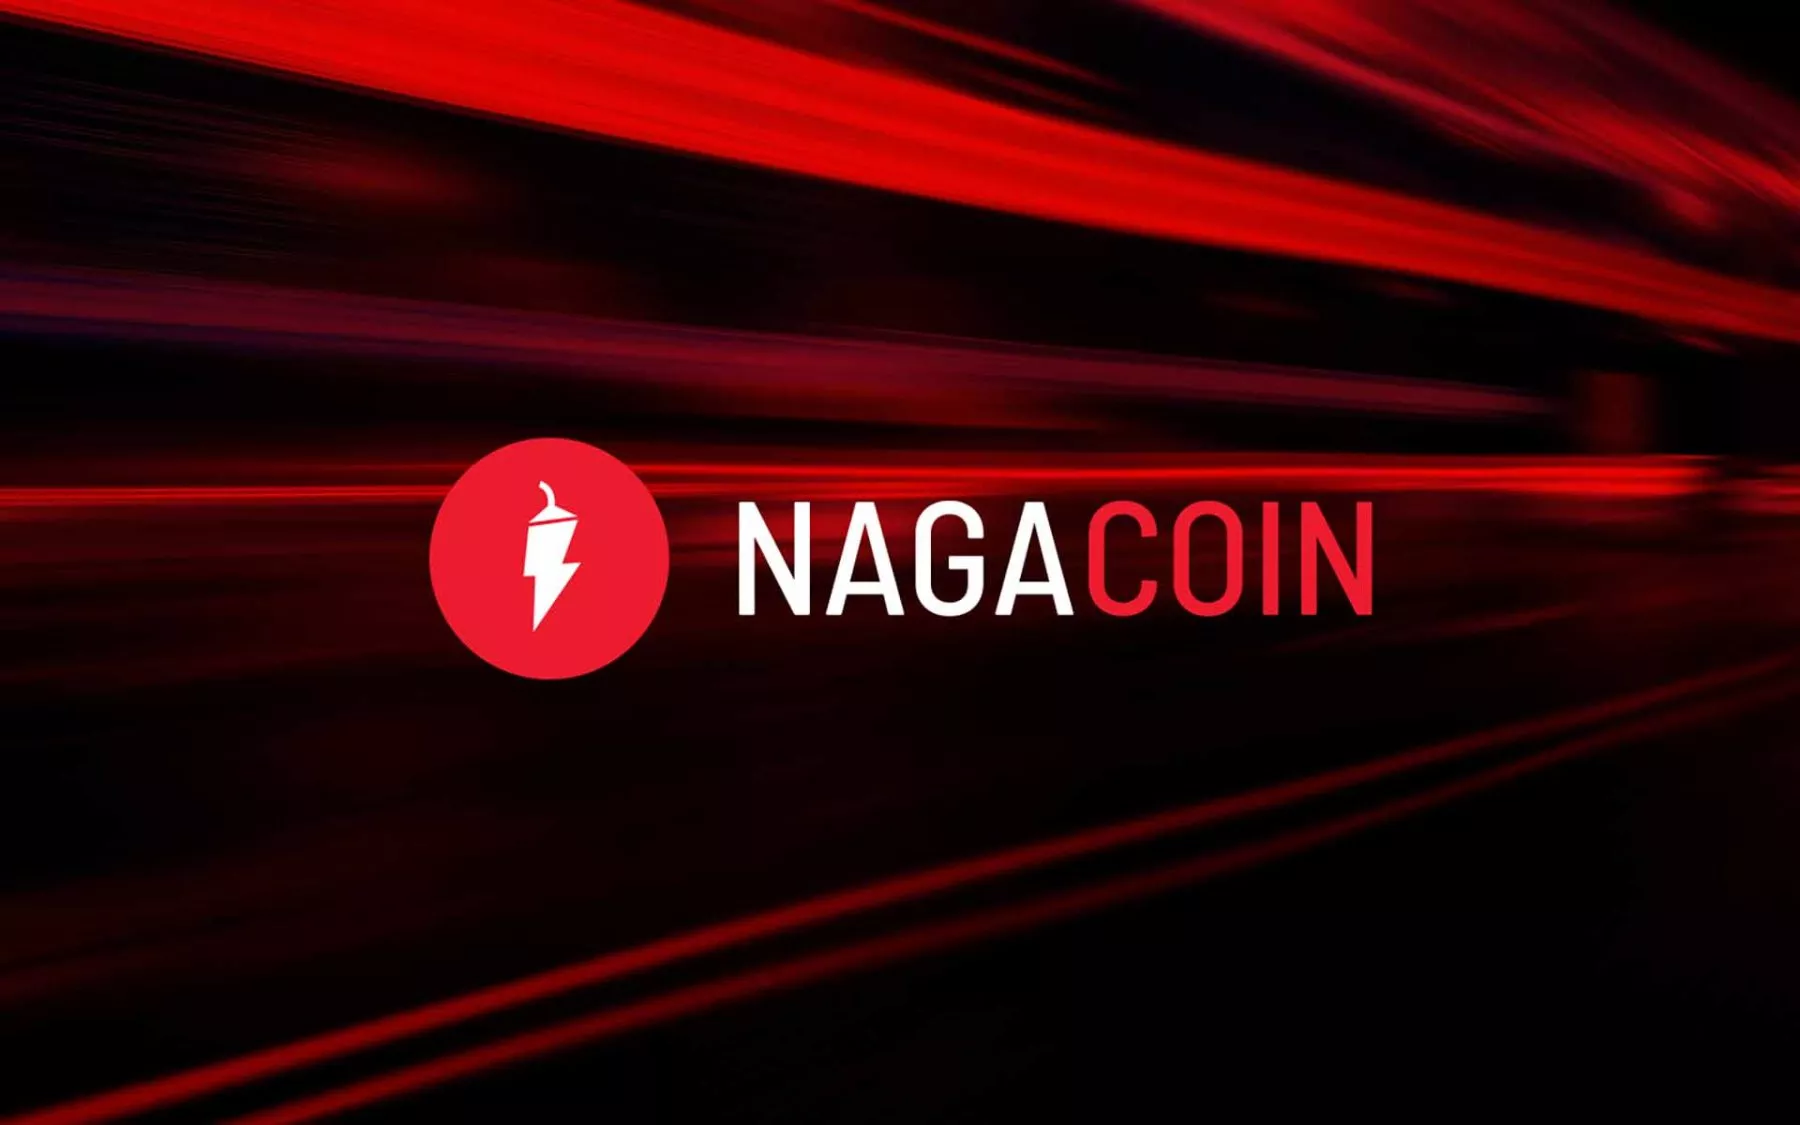 NAGA coin: Eén coin voor sociale handel